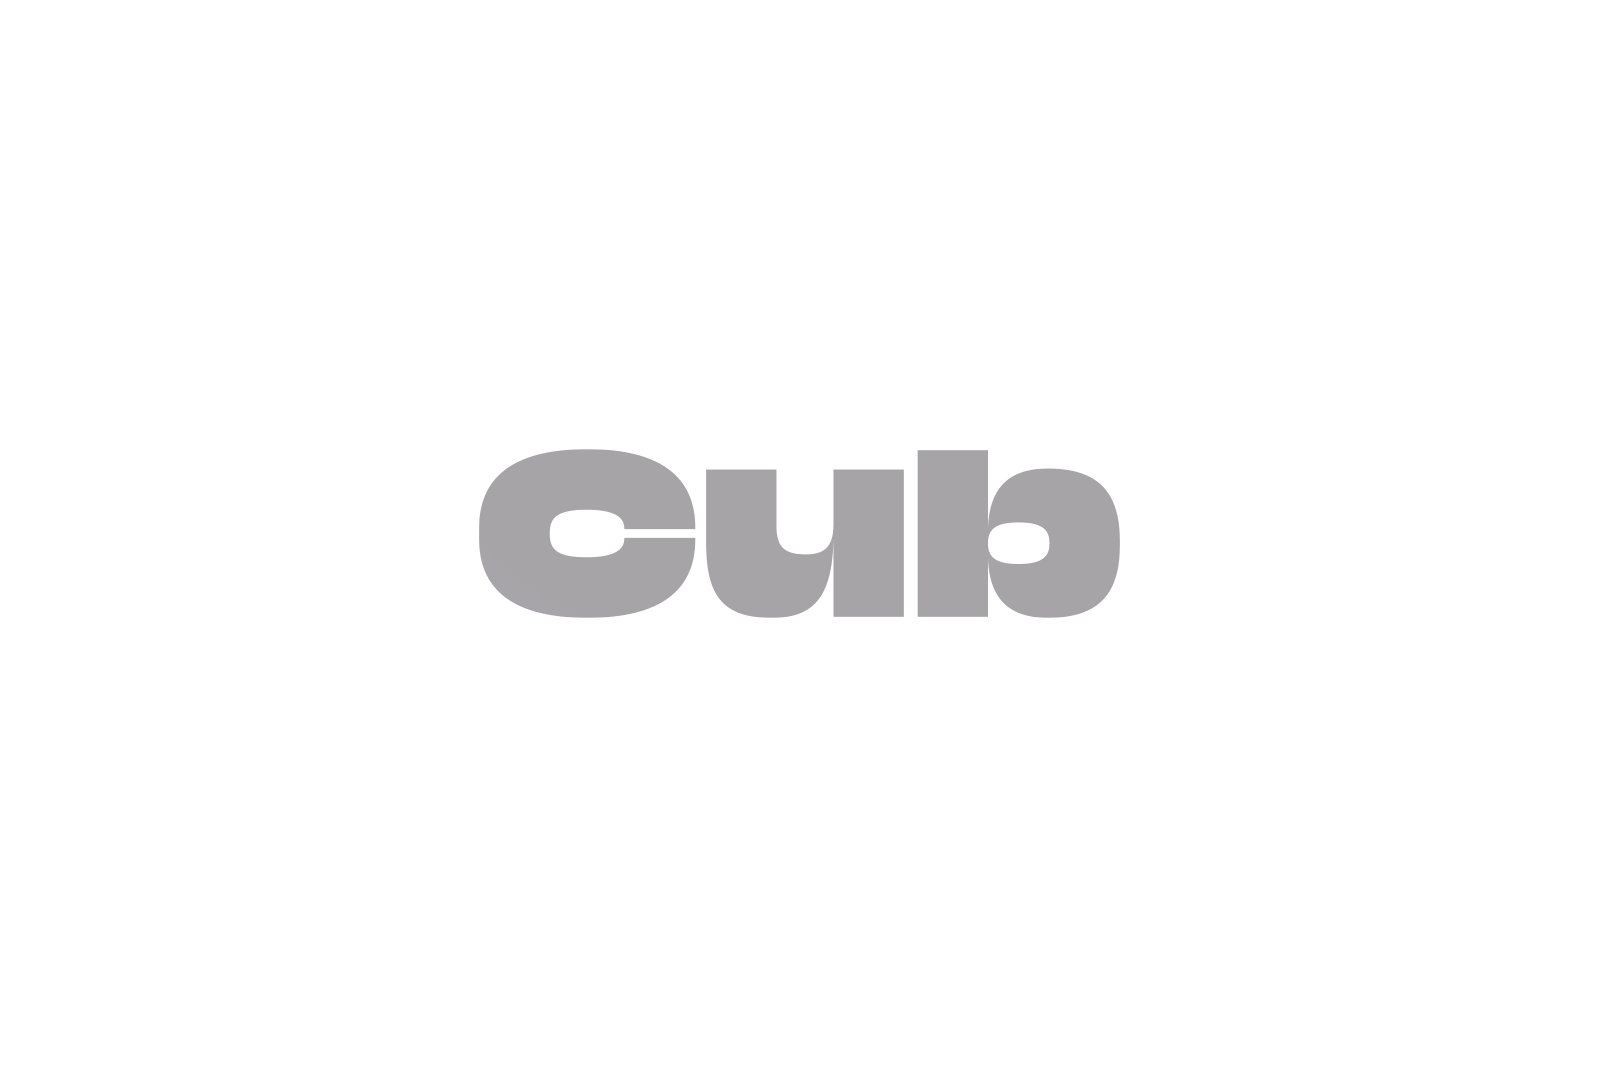 O Street Cub Bear Logo Word mark Exploration Animation. Refreshed Brand Identity